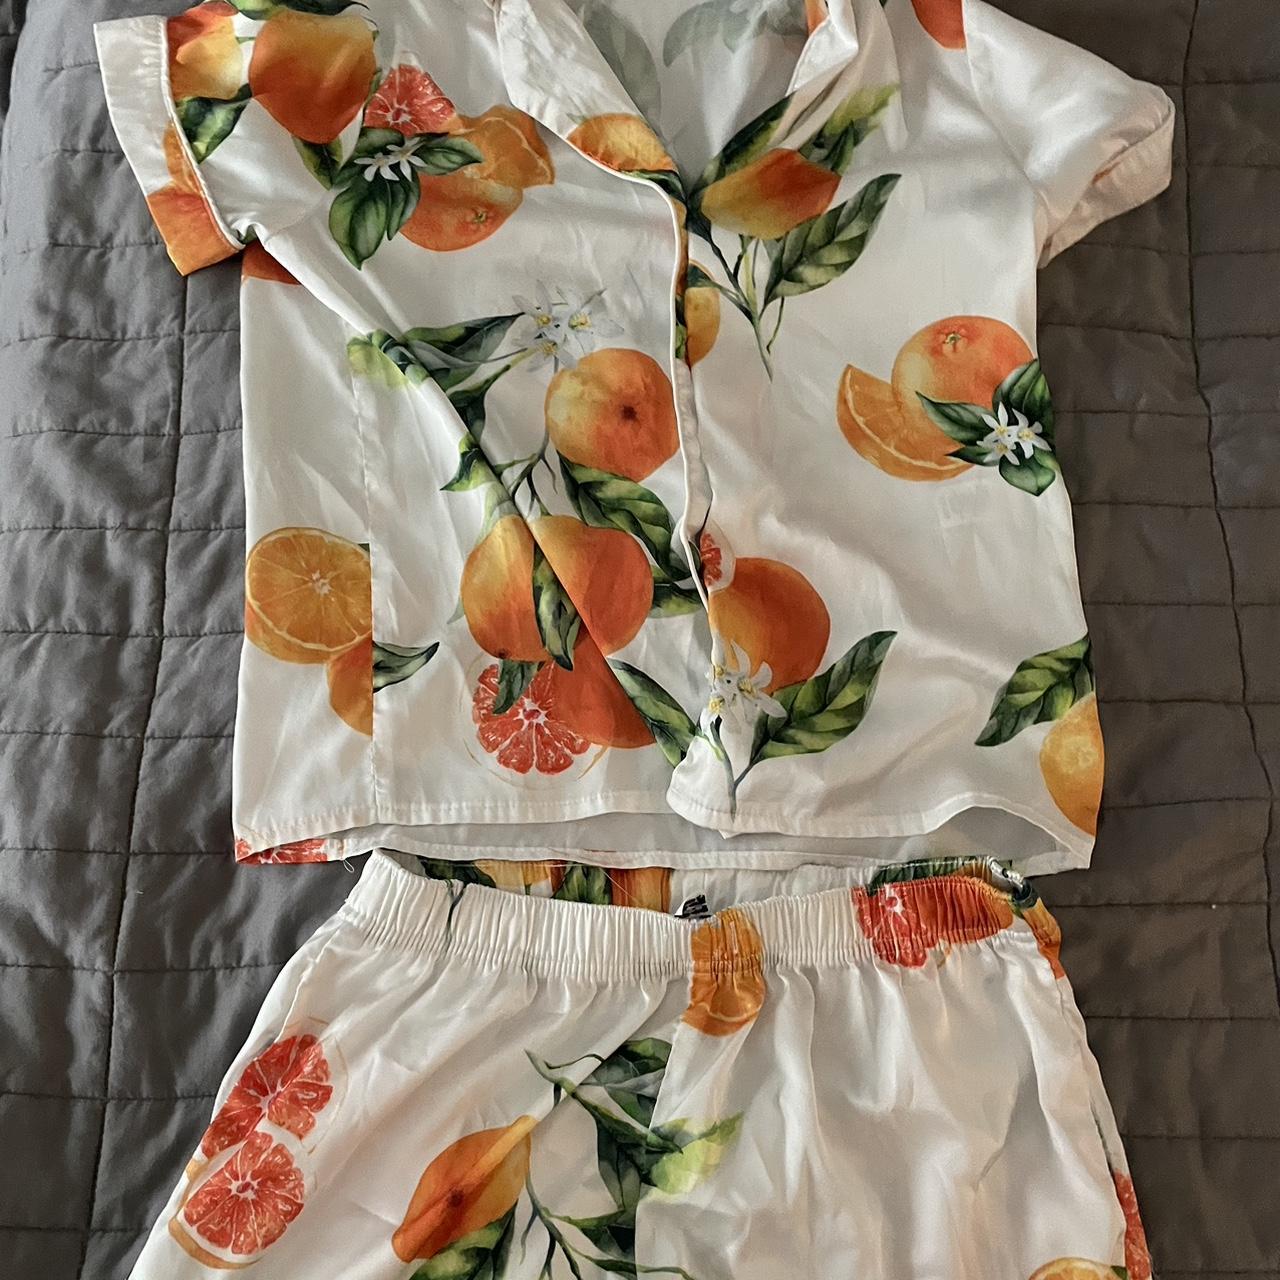 Roller Rabbit Women's White and Orange Pajamas